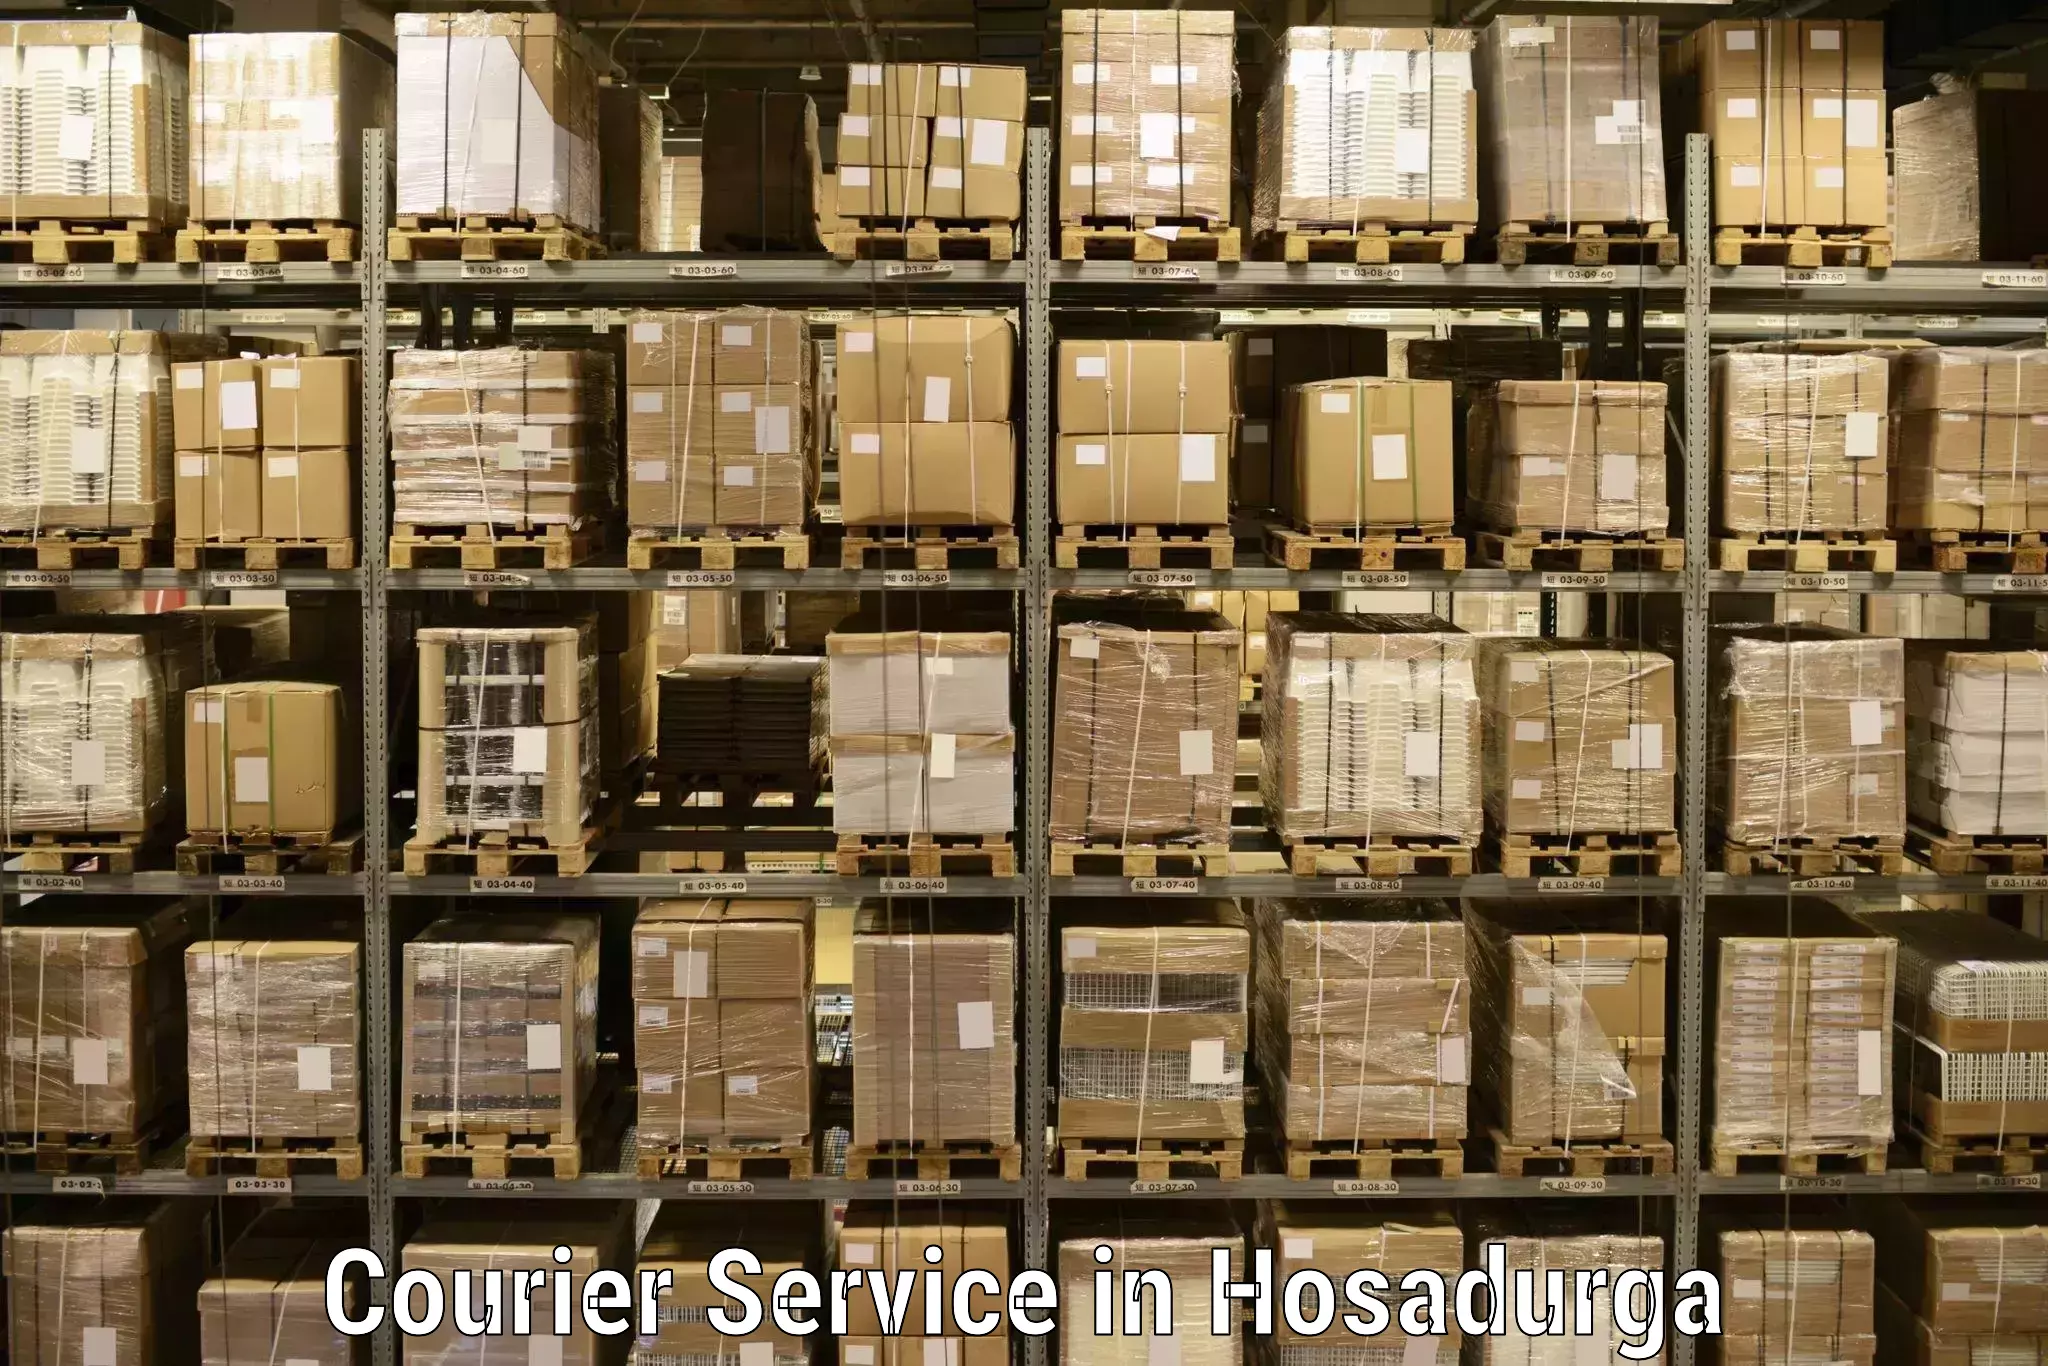 Specialized shipment handling in Hosadurga